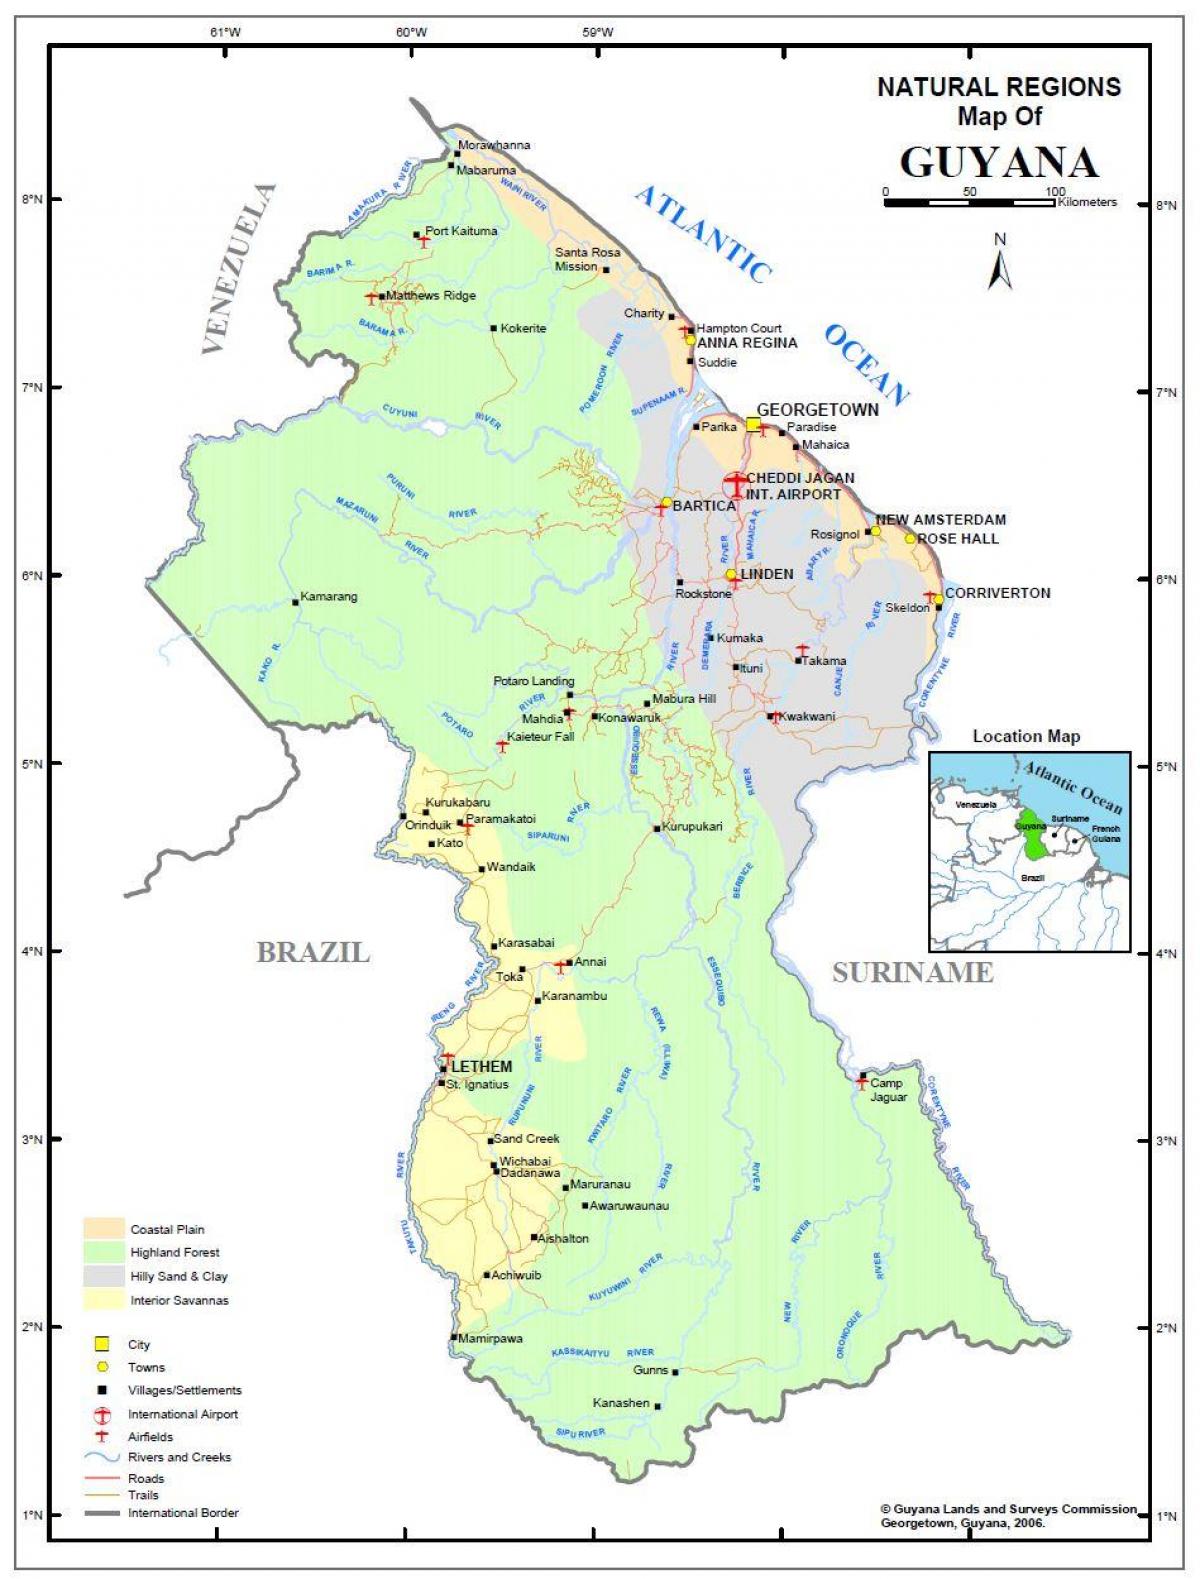 mapa Gvajani pokazuje 4 prirodni regionima